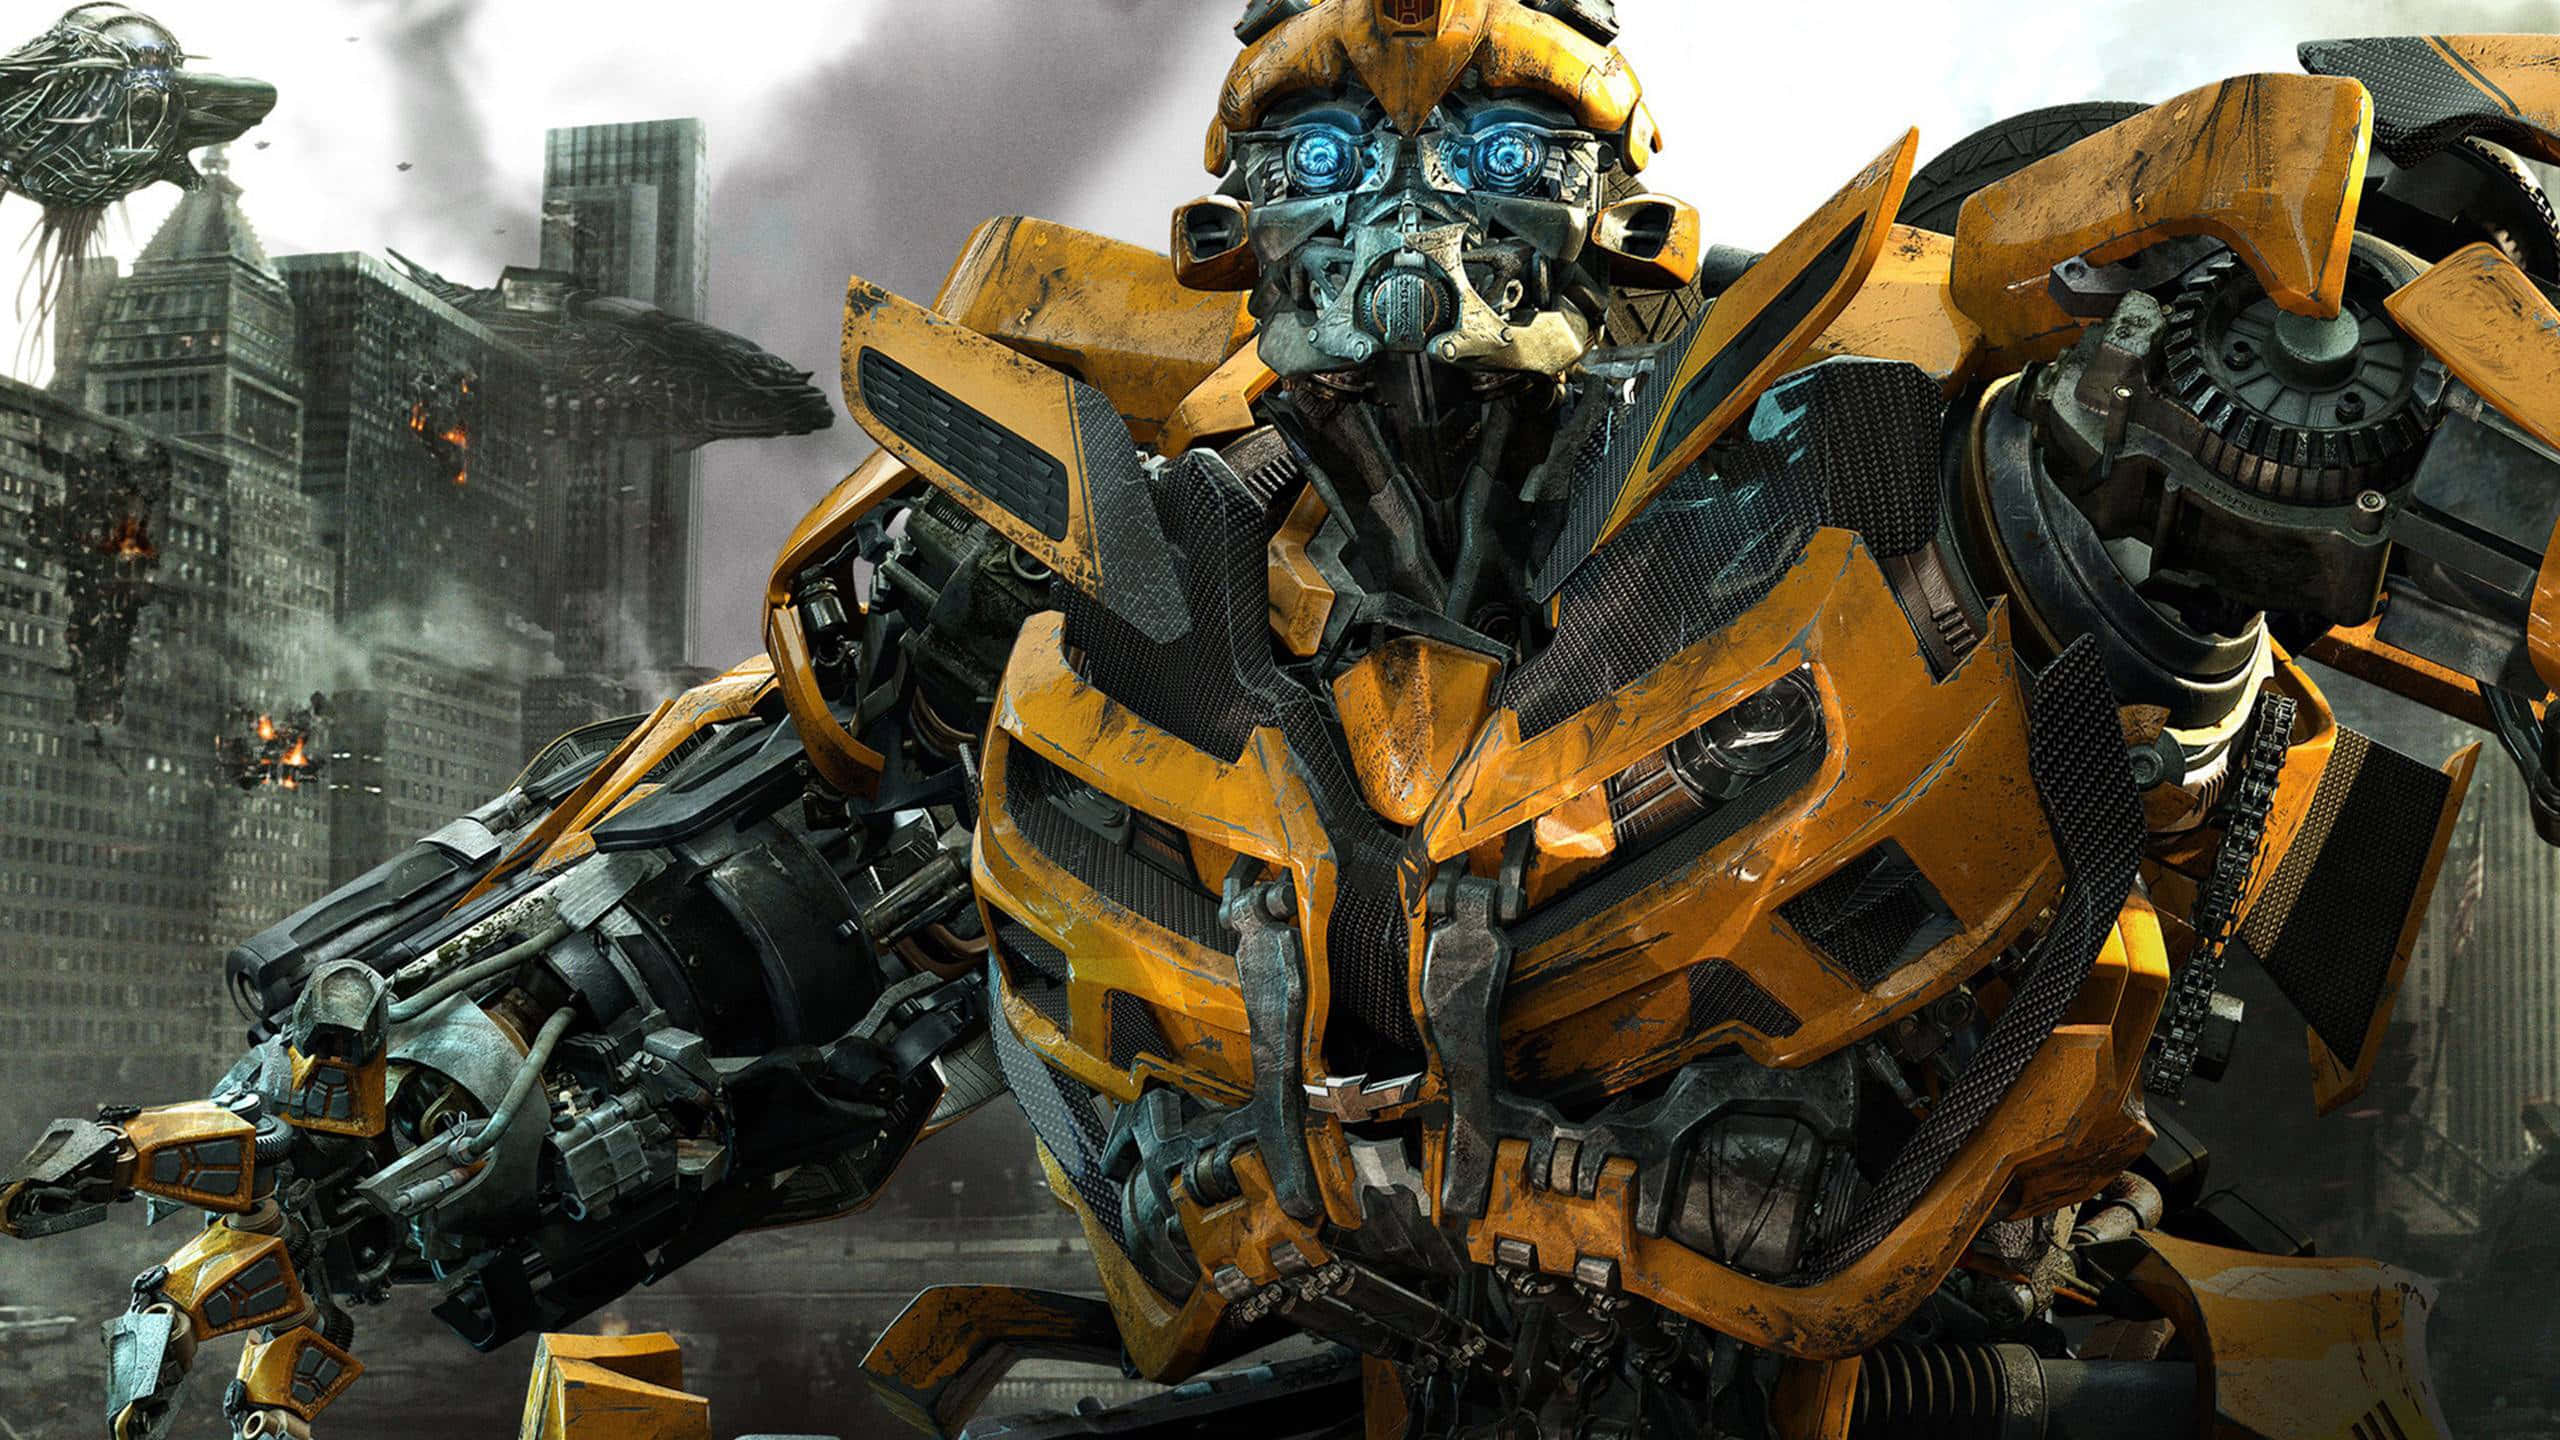 Transformersden Sidste Ridder - Bumblebee